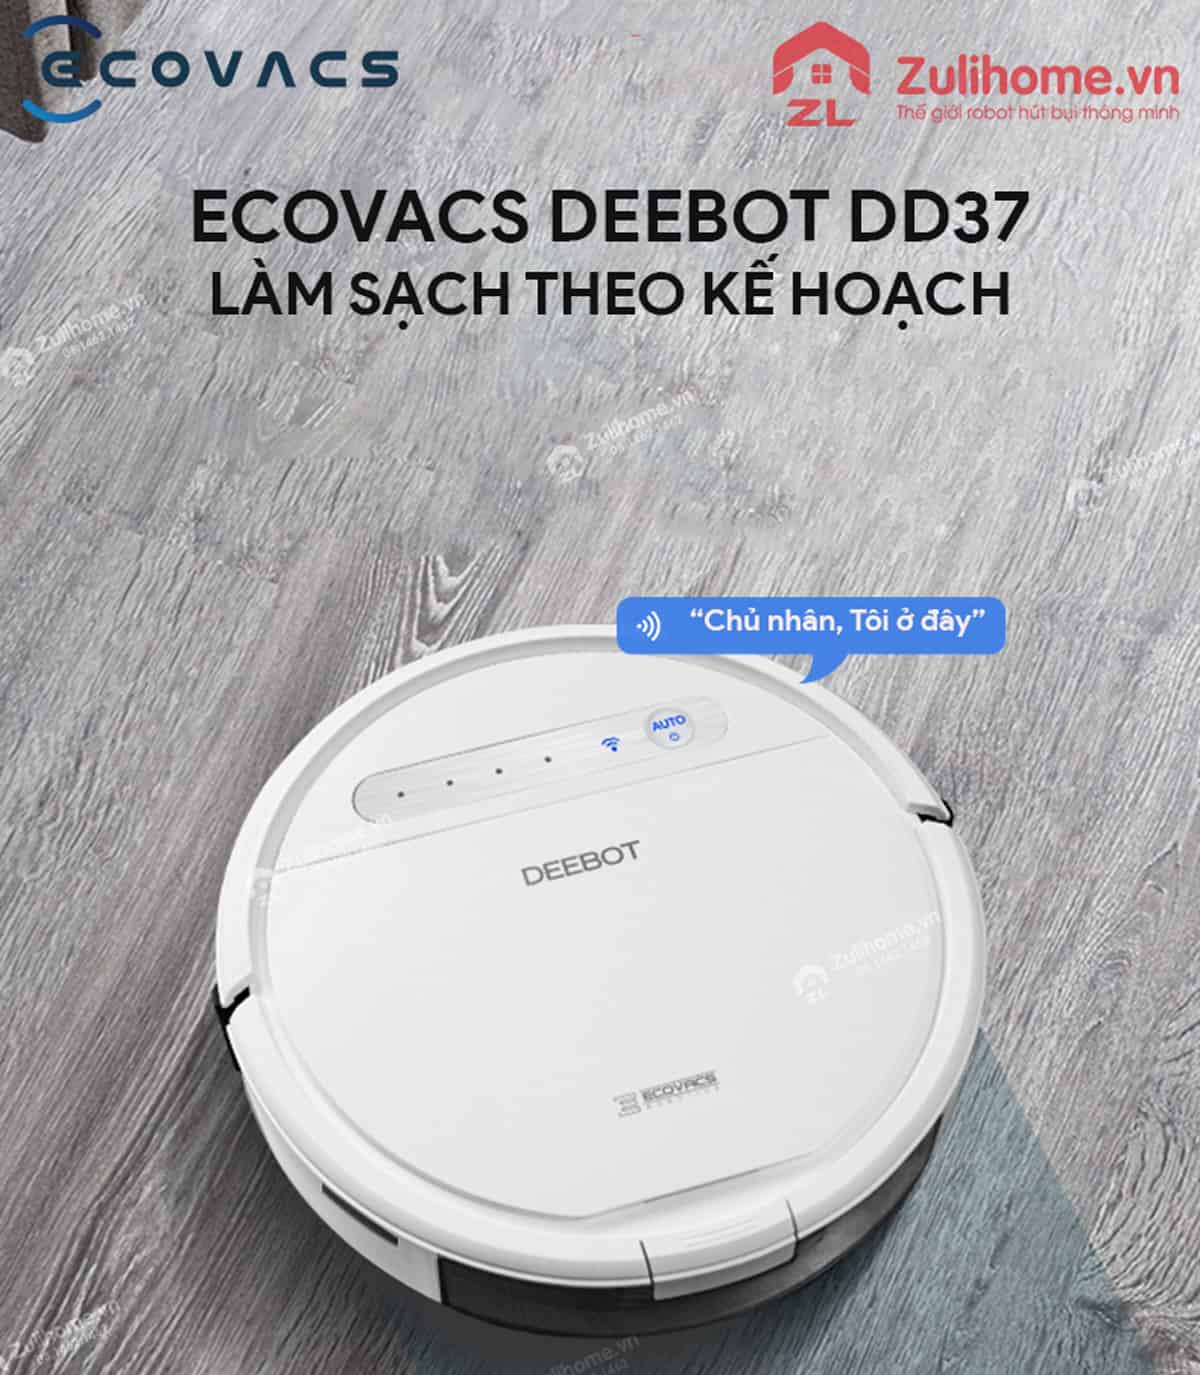 Ecovacs Deebot DD37